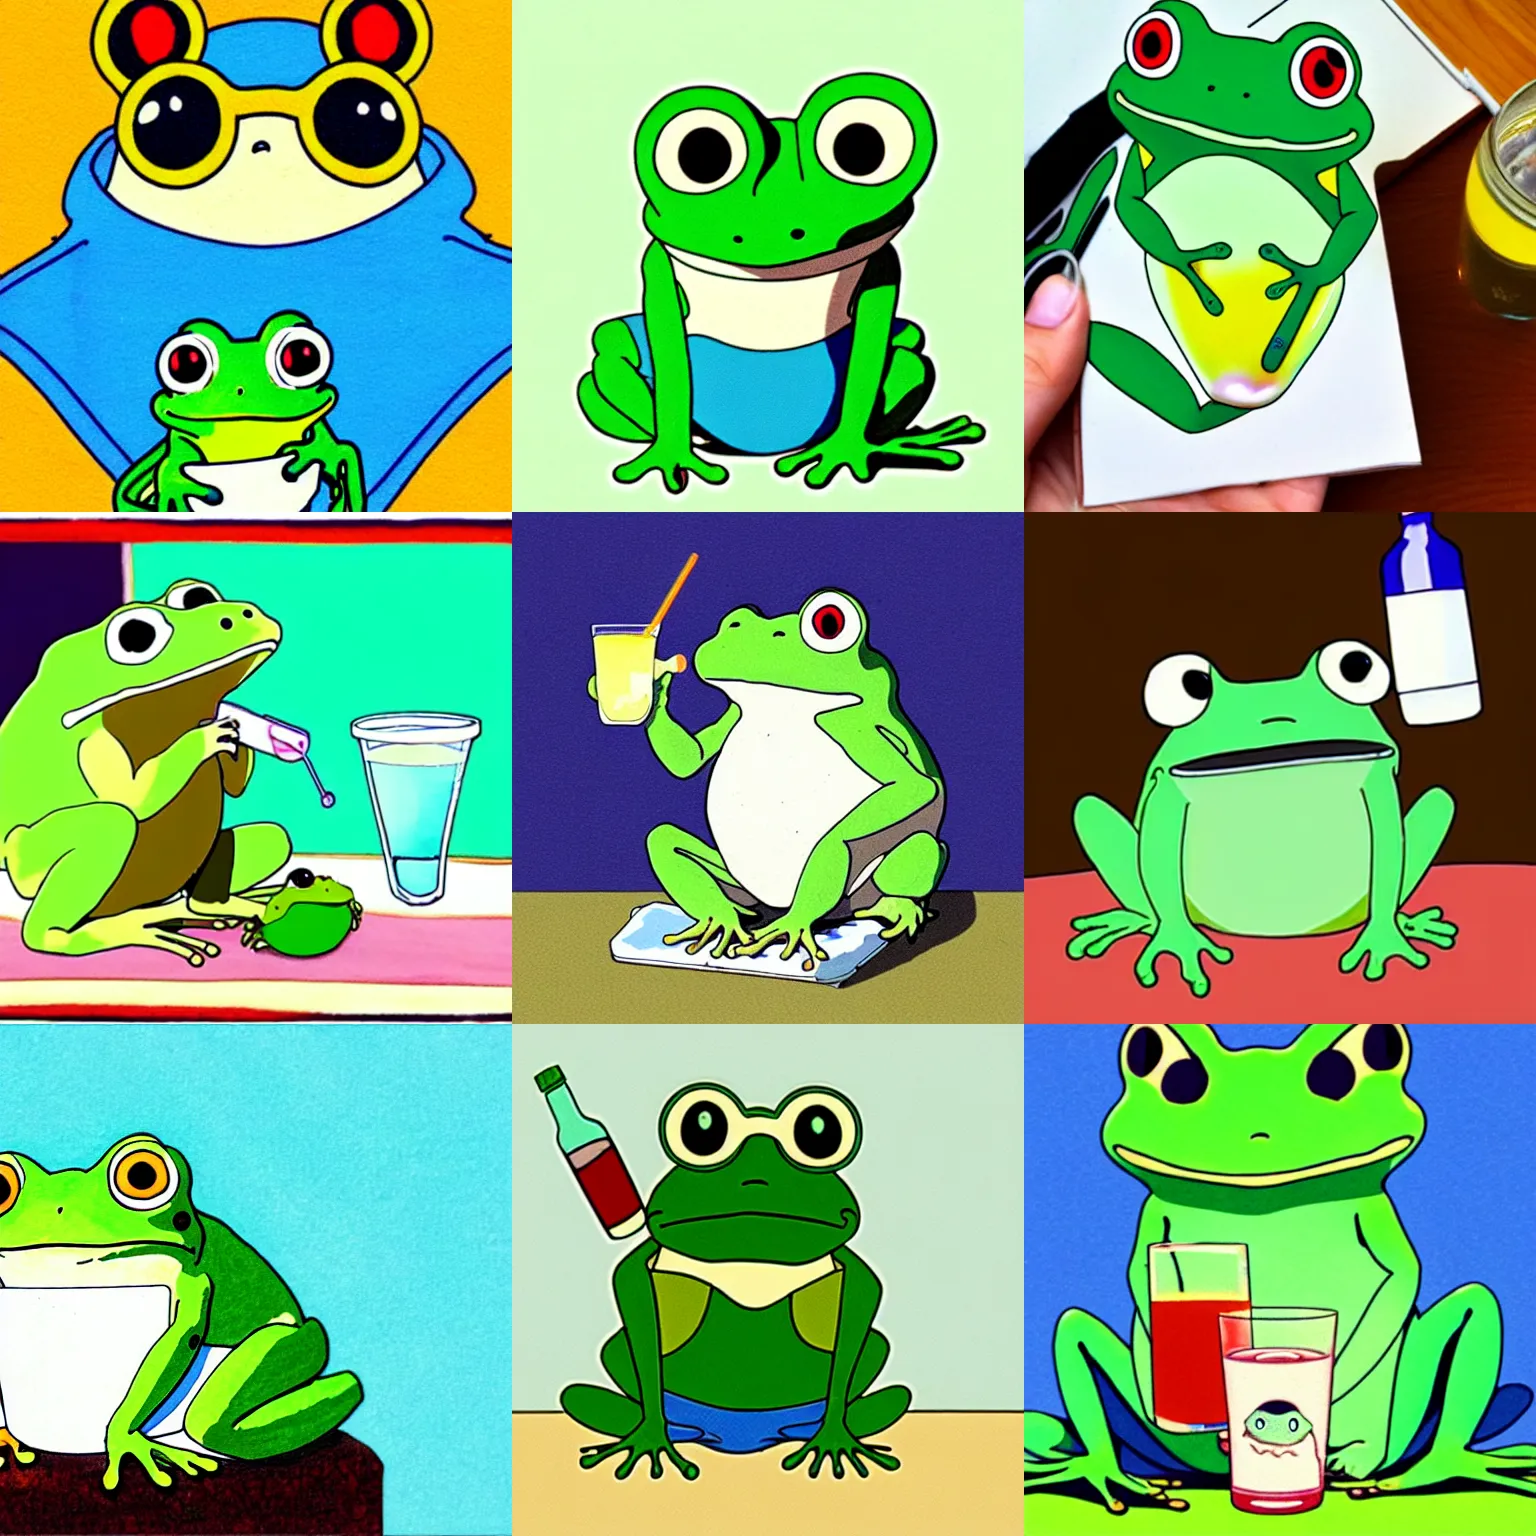 Prompt: studio ghibli frog, glasses, drinking a juice box